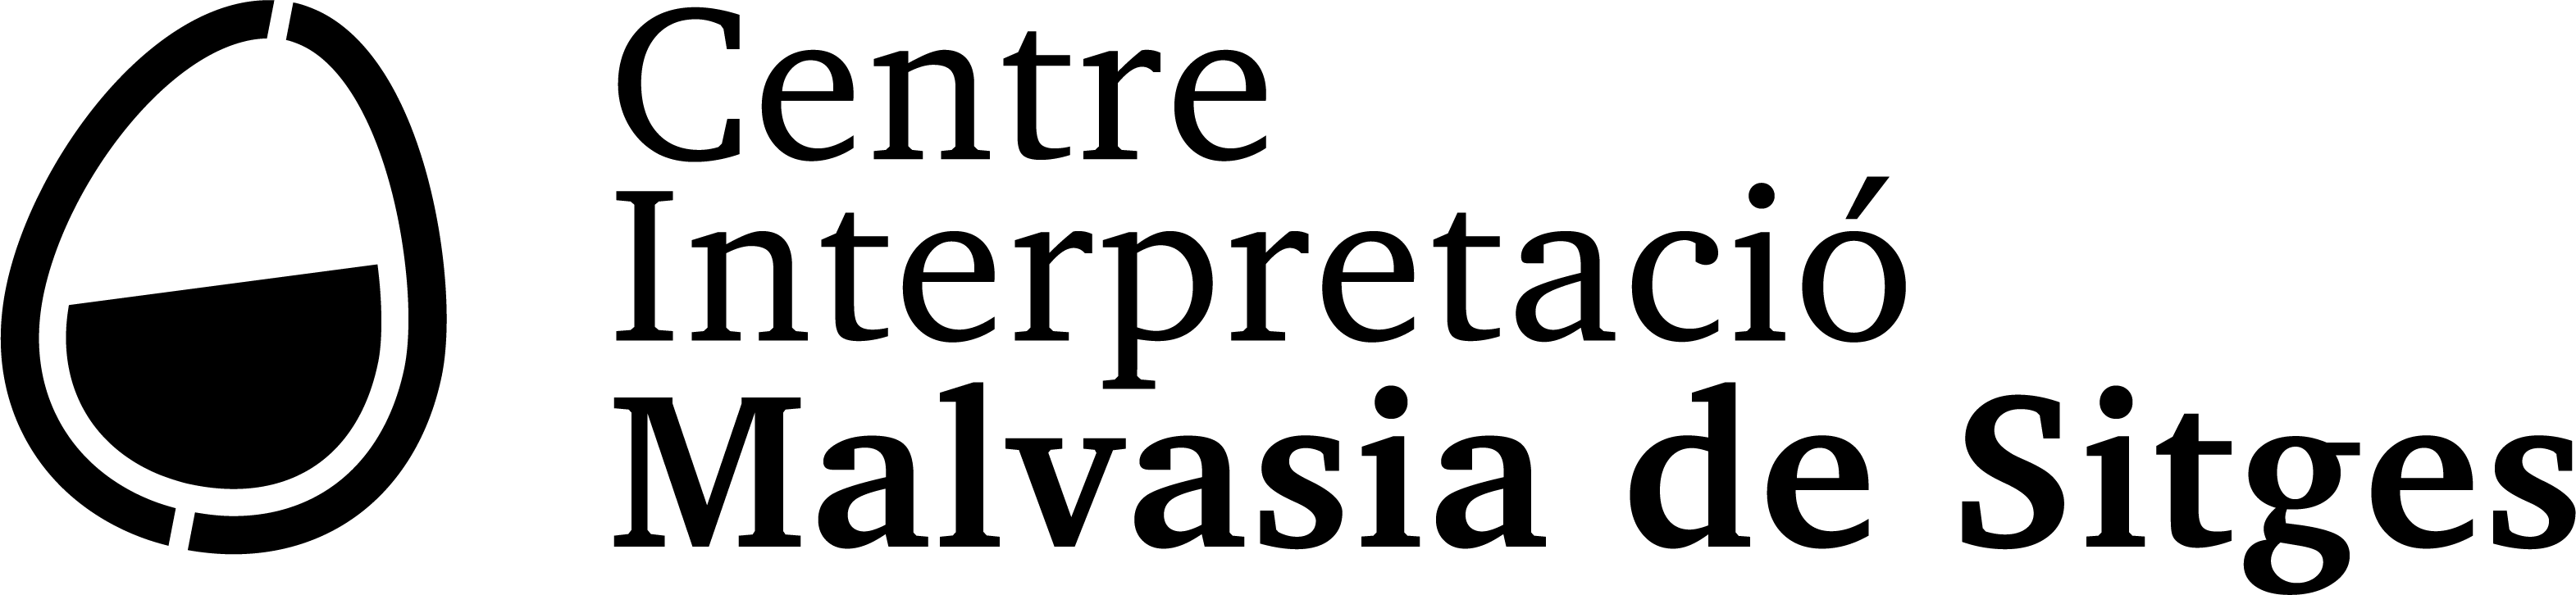 Logo-malvasia